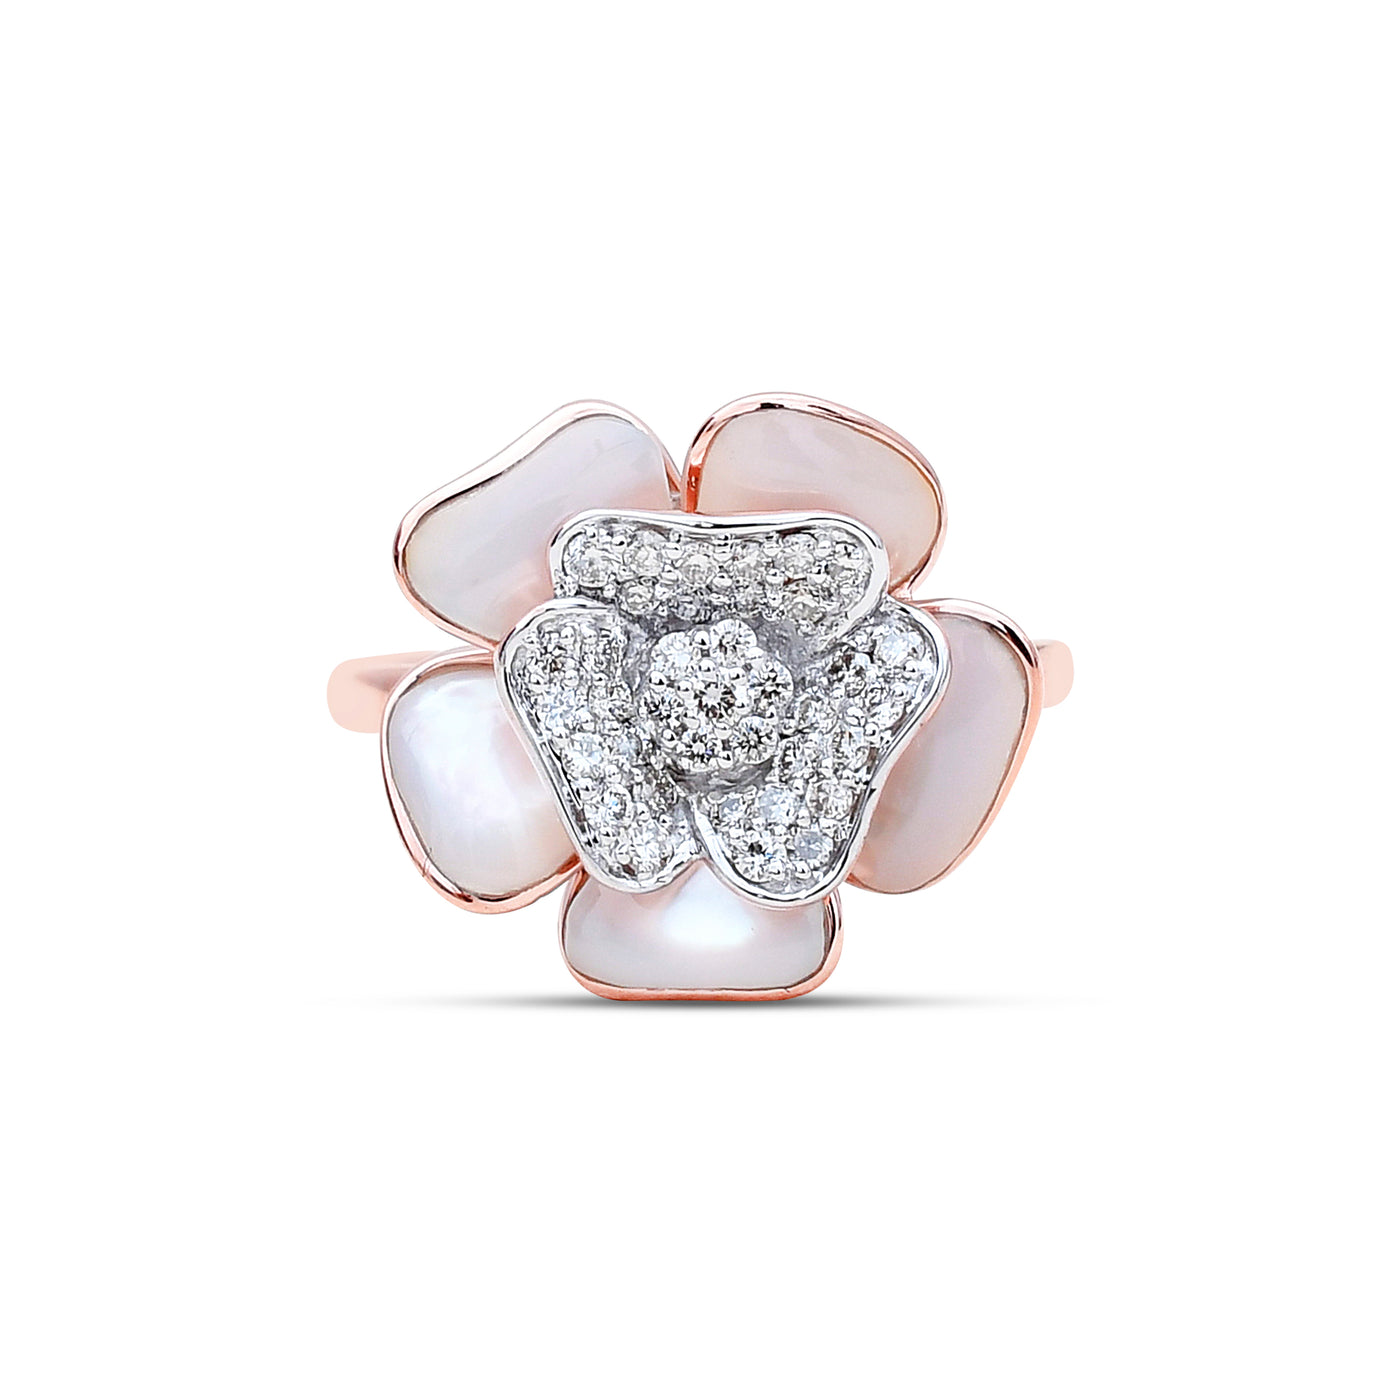 The Rose Blossom Diamond Ring